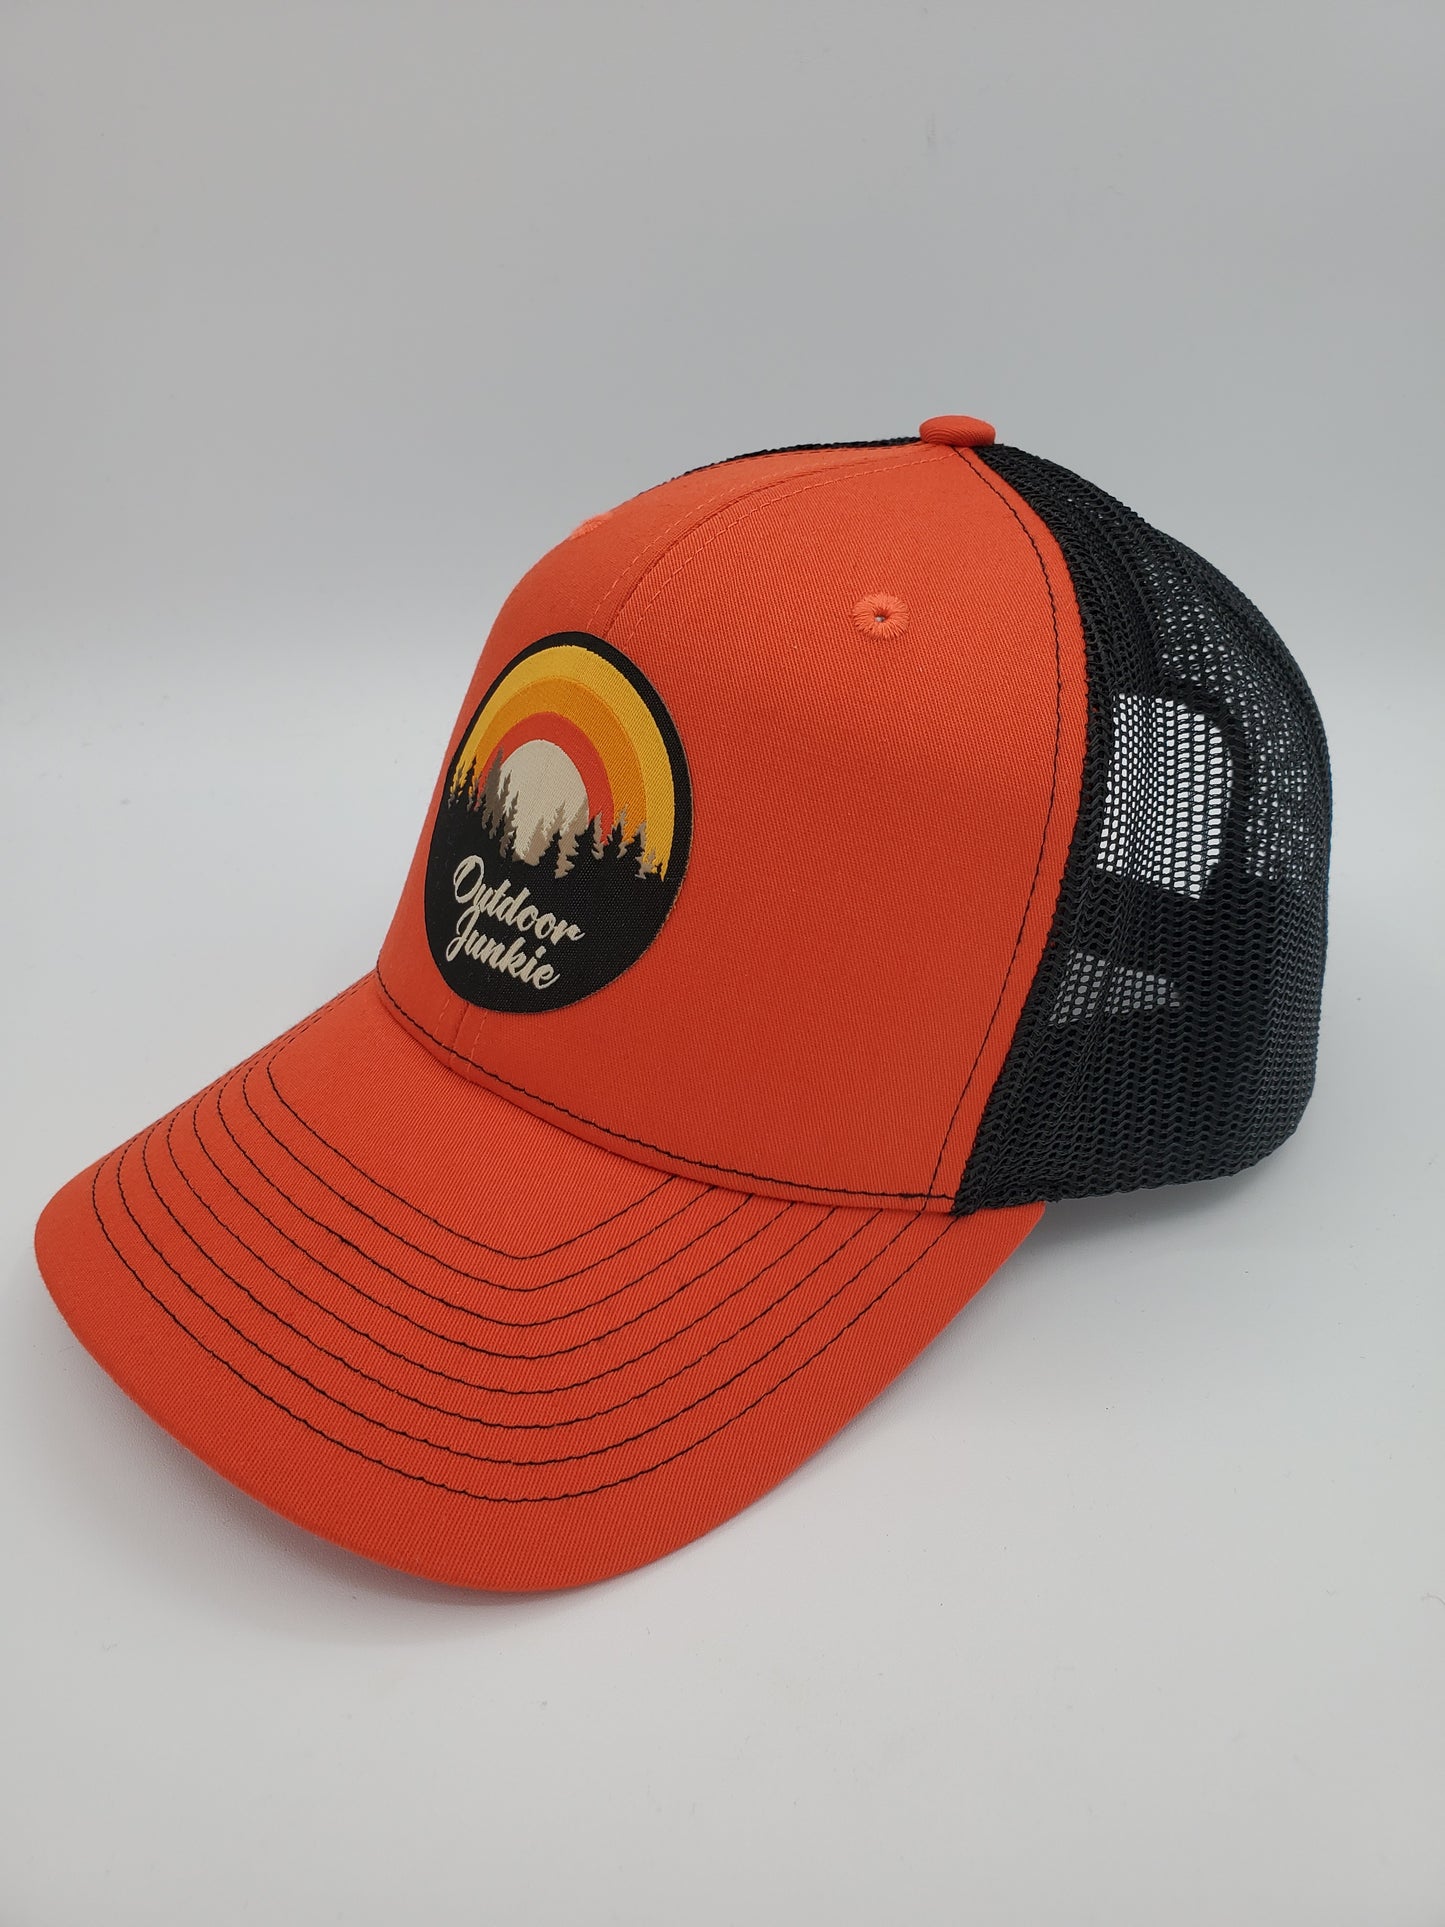 "Outdoor Junkie" Design Trucker Hat (Black Mesh/ Orange Fabric)